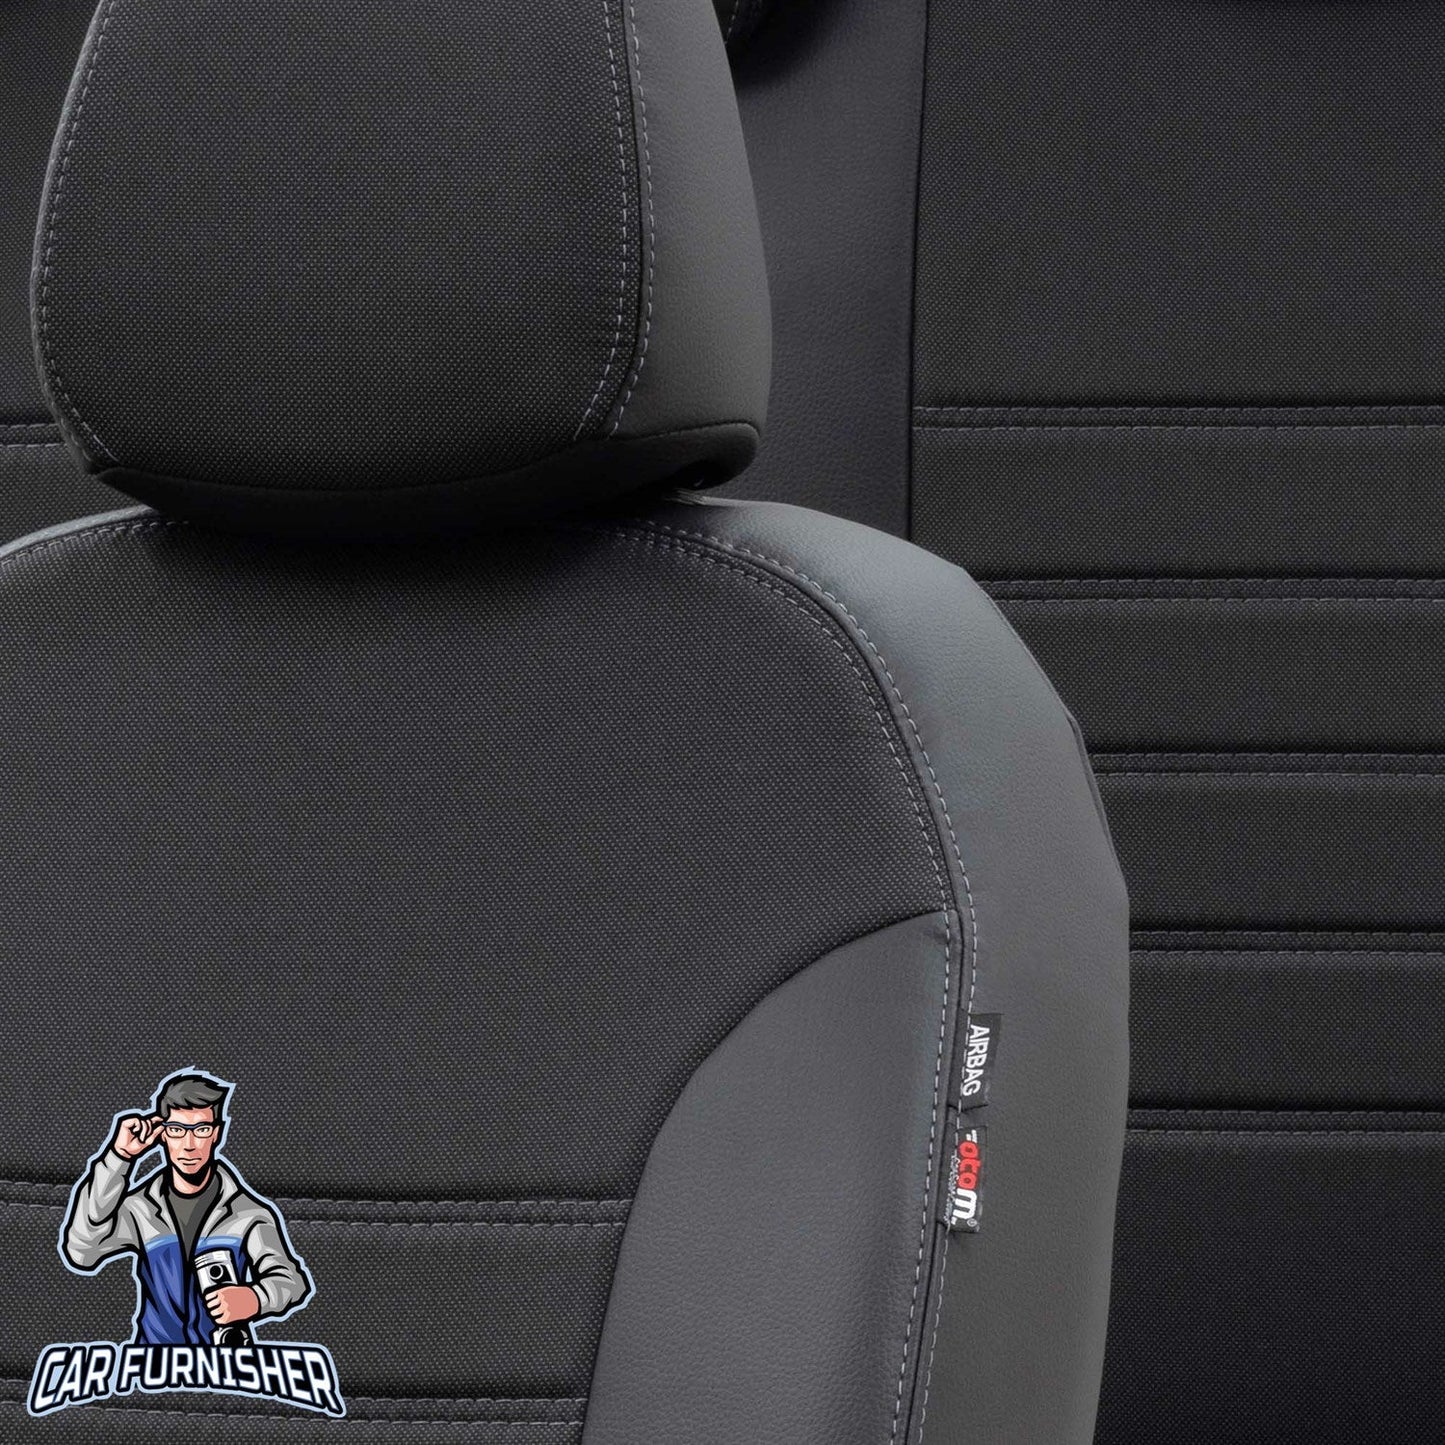 Kia Sorento Seat Covers Paris Leather & Jacquard Design Black Leather & Jacquard Fabric